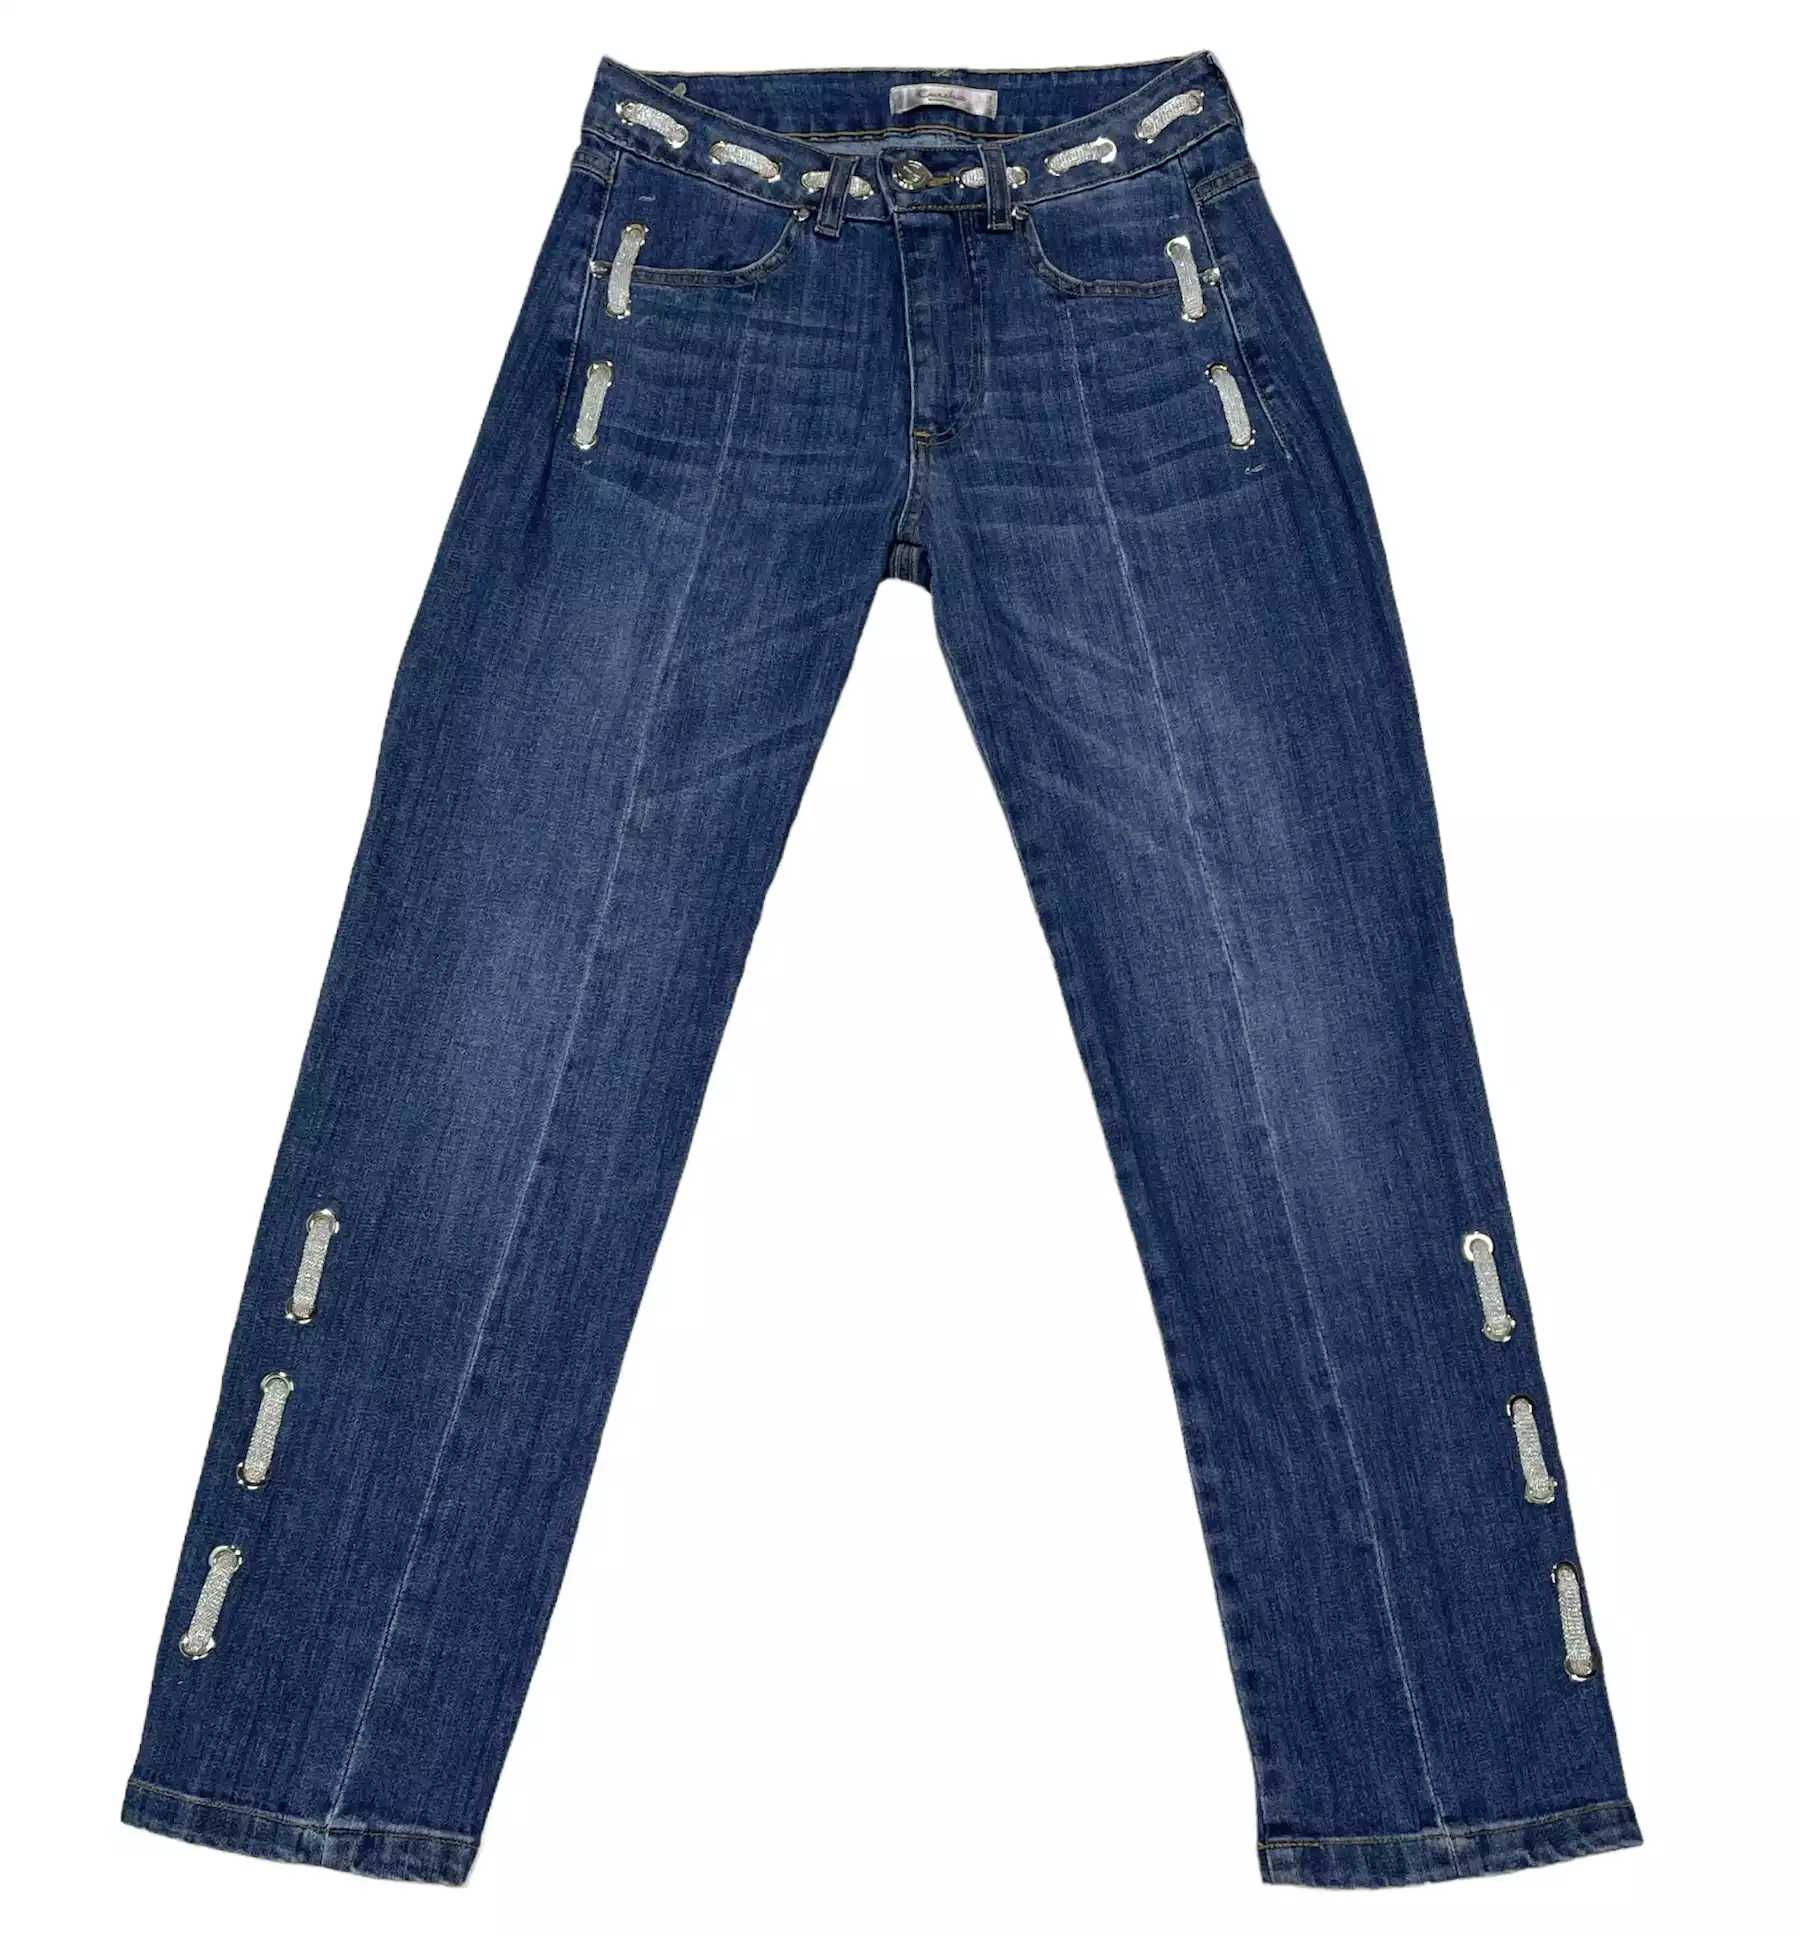 Denim Jeans by Eureka